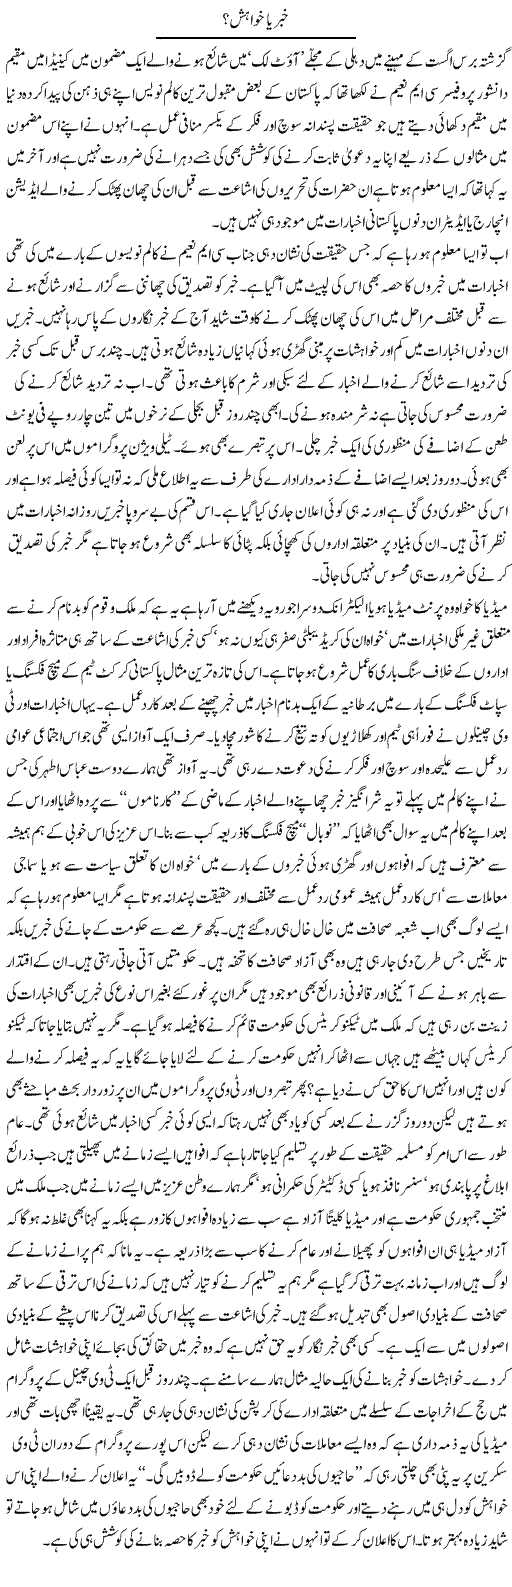 News or Wish Express Column Hameed Akhtar 30 September 2010